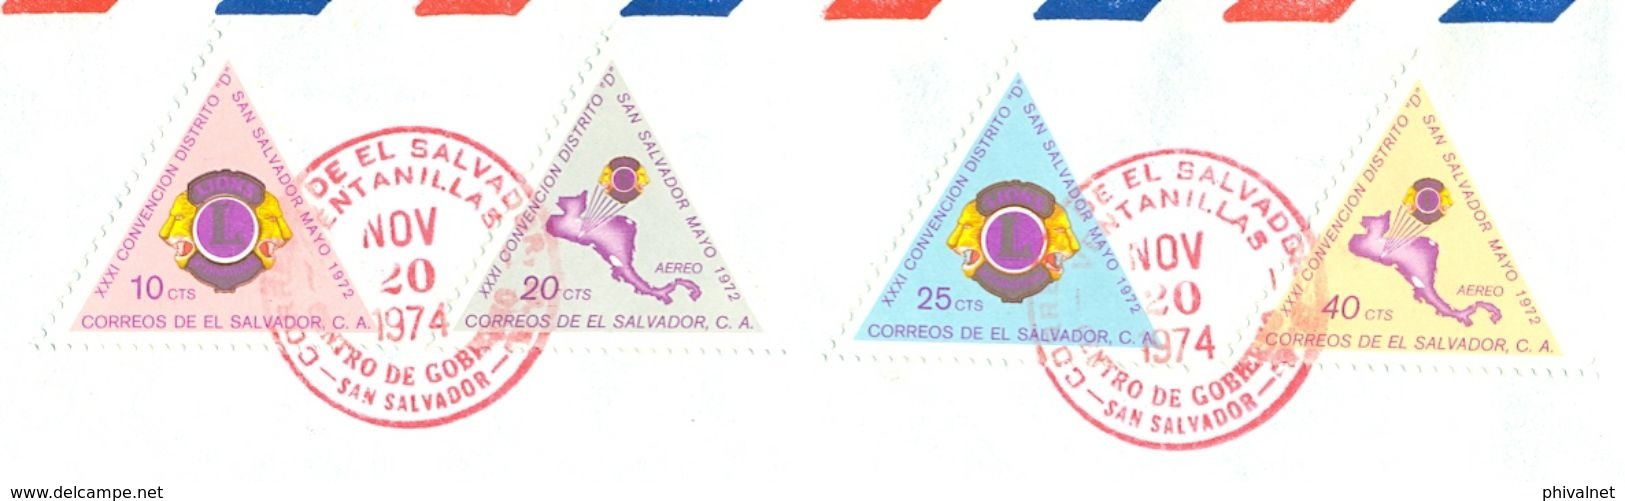 1974 , EL SALVADOR - XXXI CONVENCION DISTRITO "D" , SAN SALVADOR , MAT. CENTRO DE GOBIERNO , TEMA LIONS INTERNATIONAL - Rotary, Lions Club